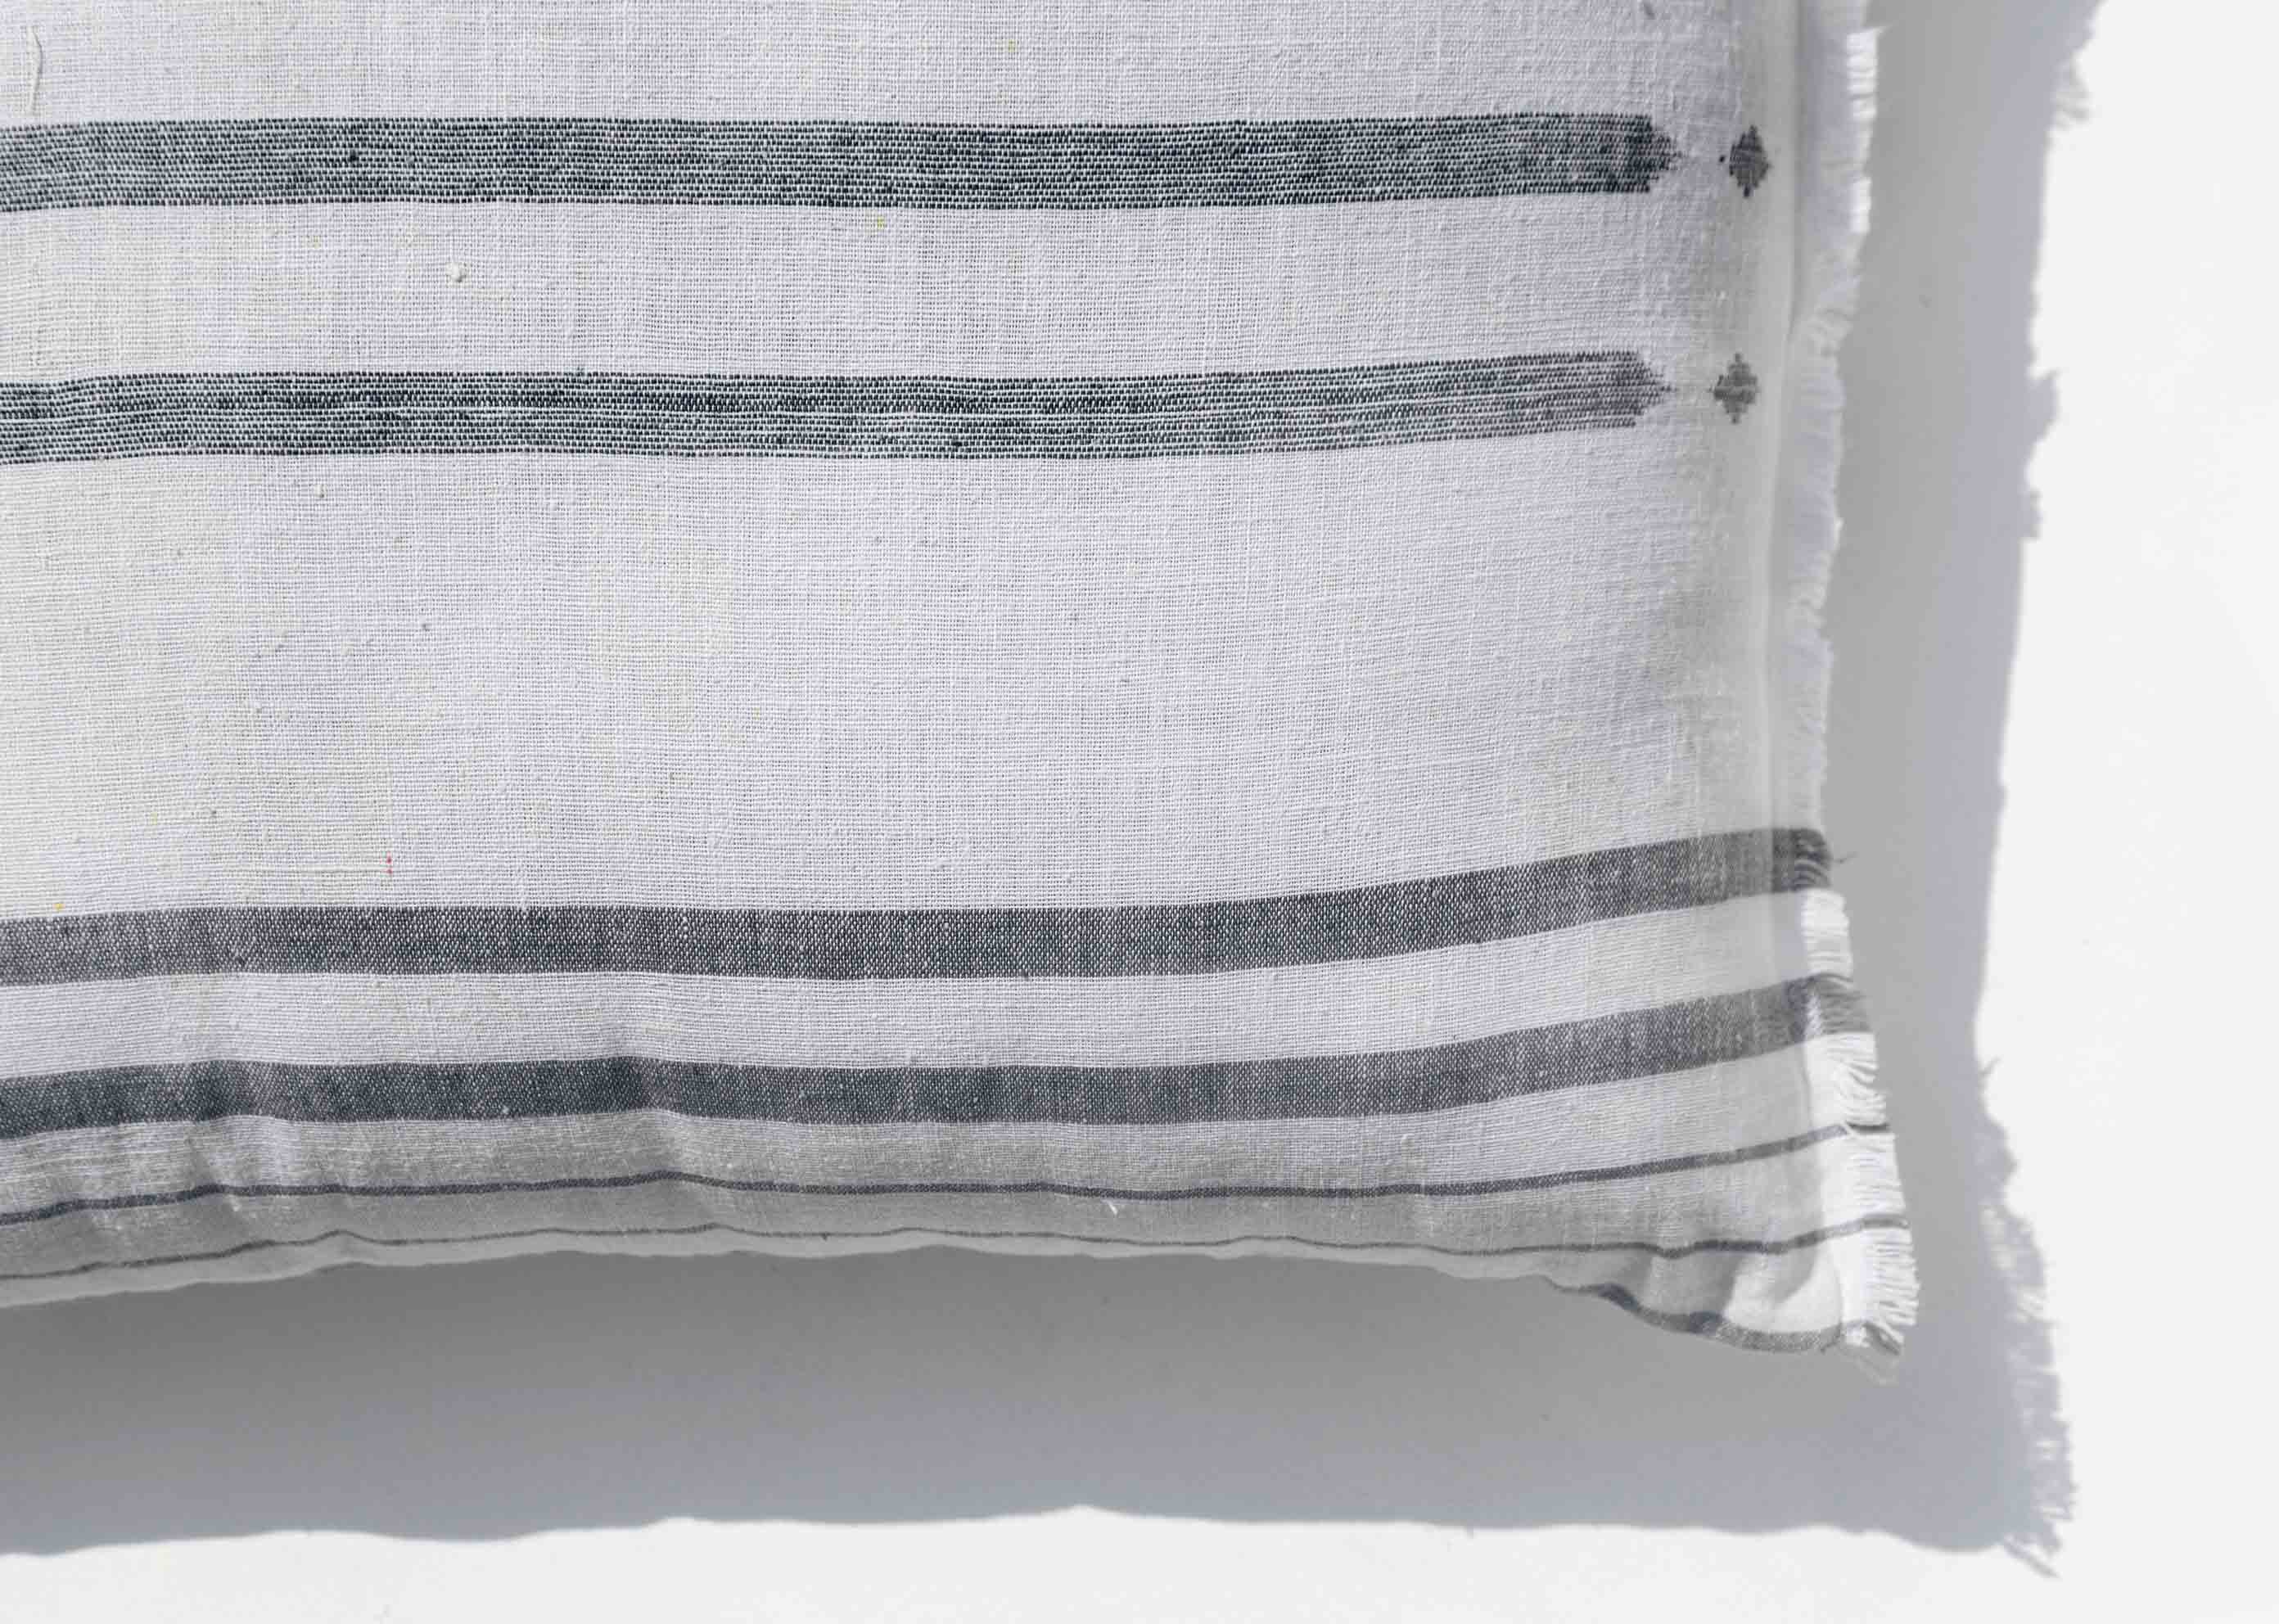 Diamond Stripe Cushion Cover - Grey